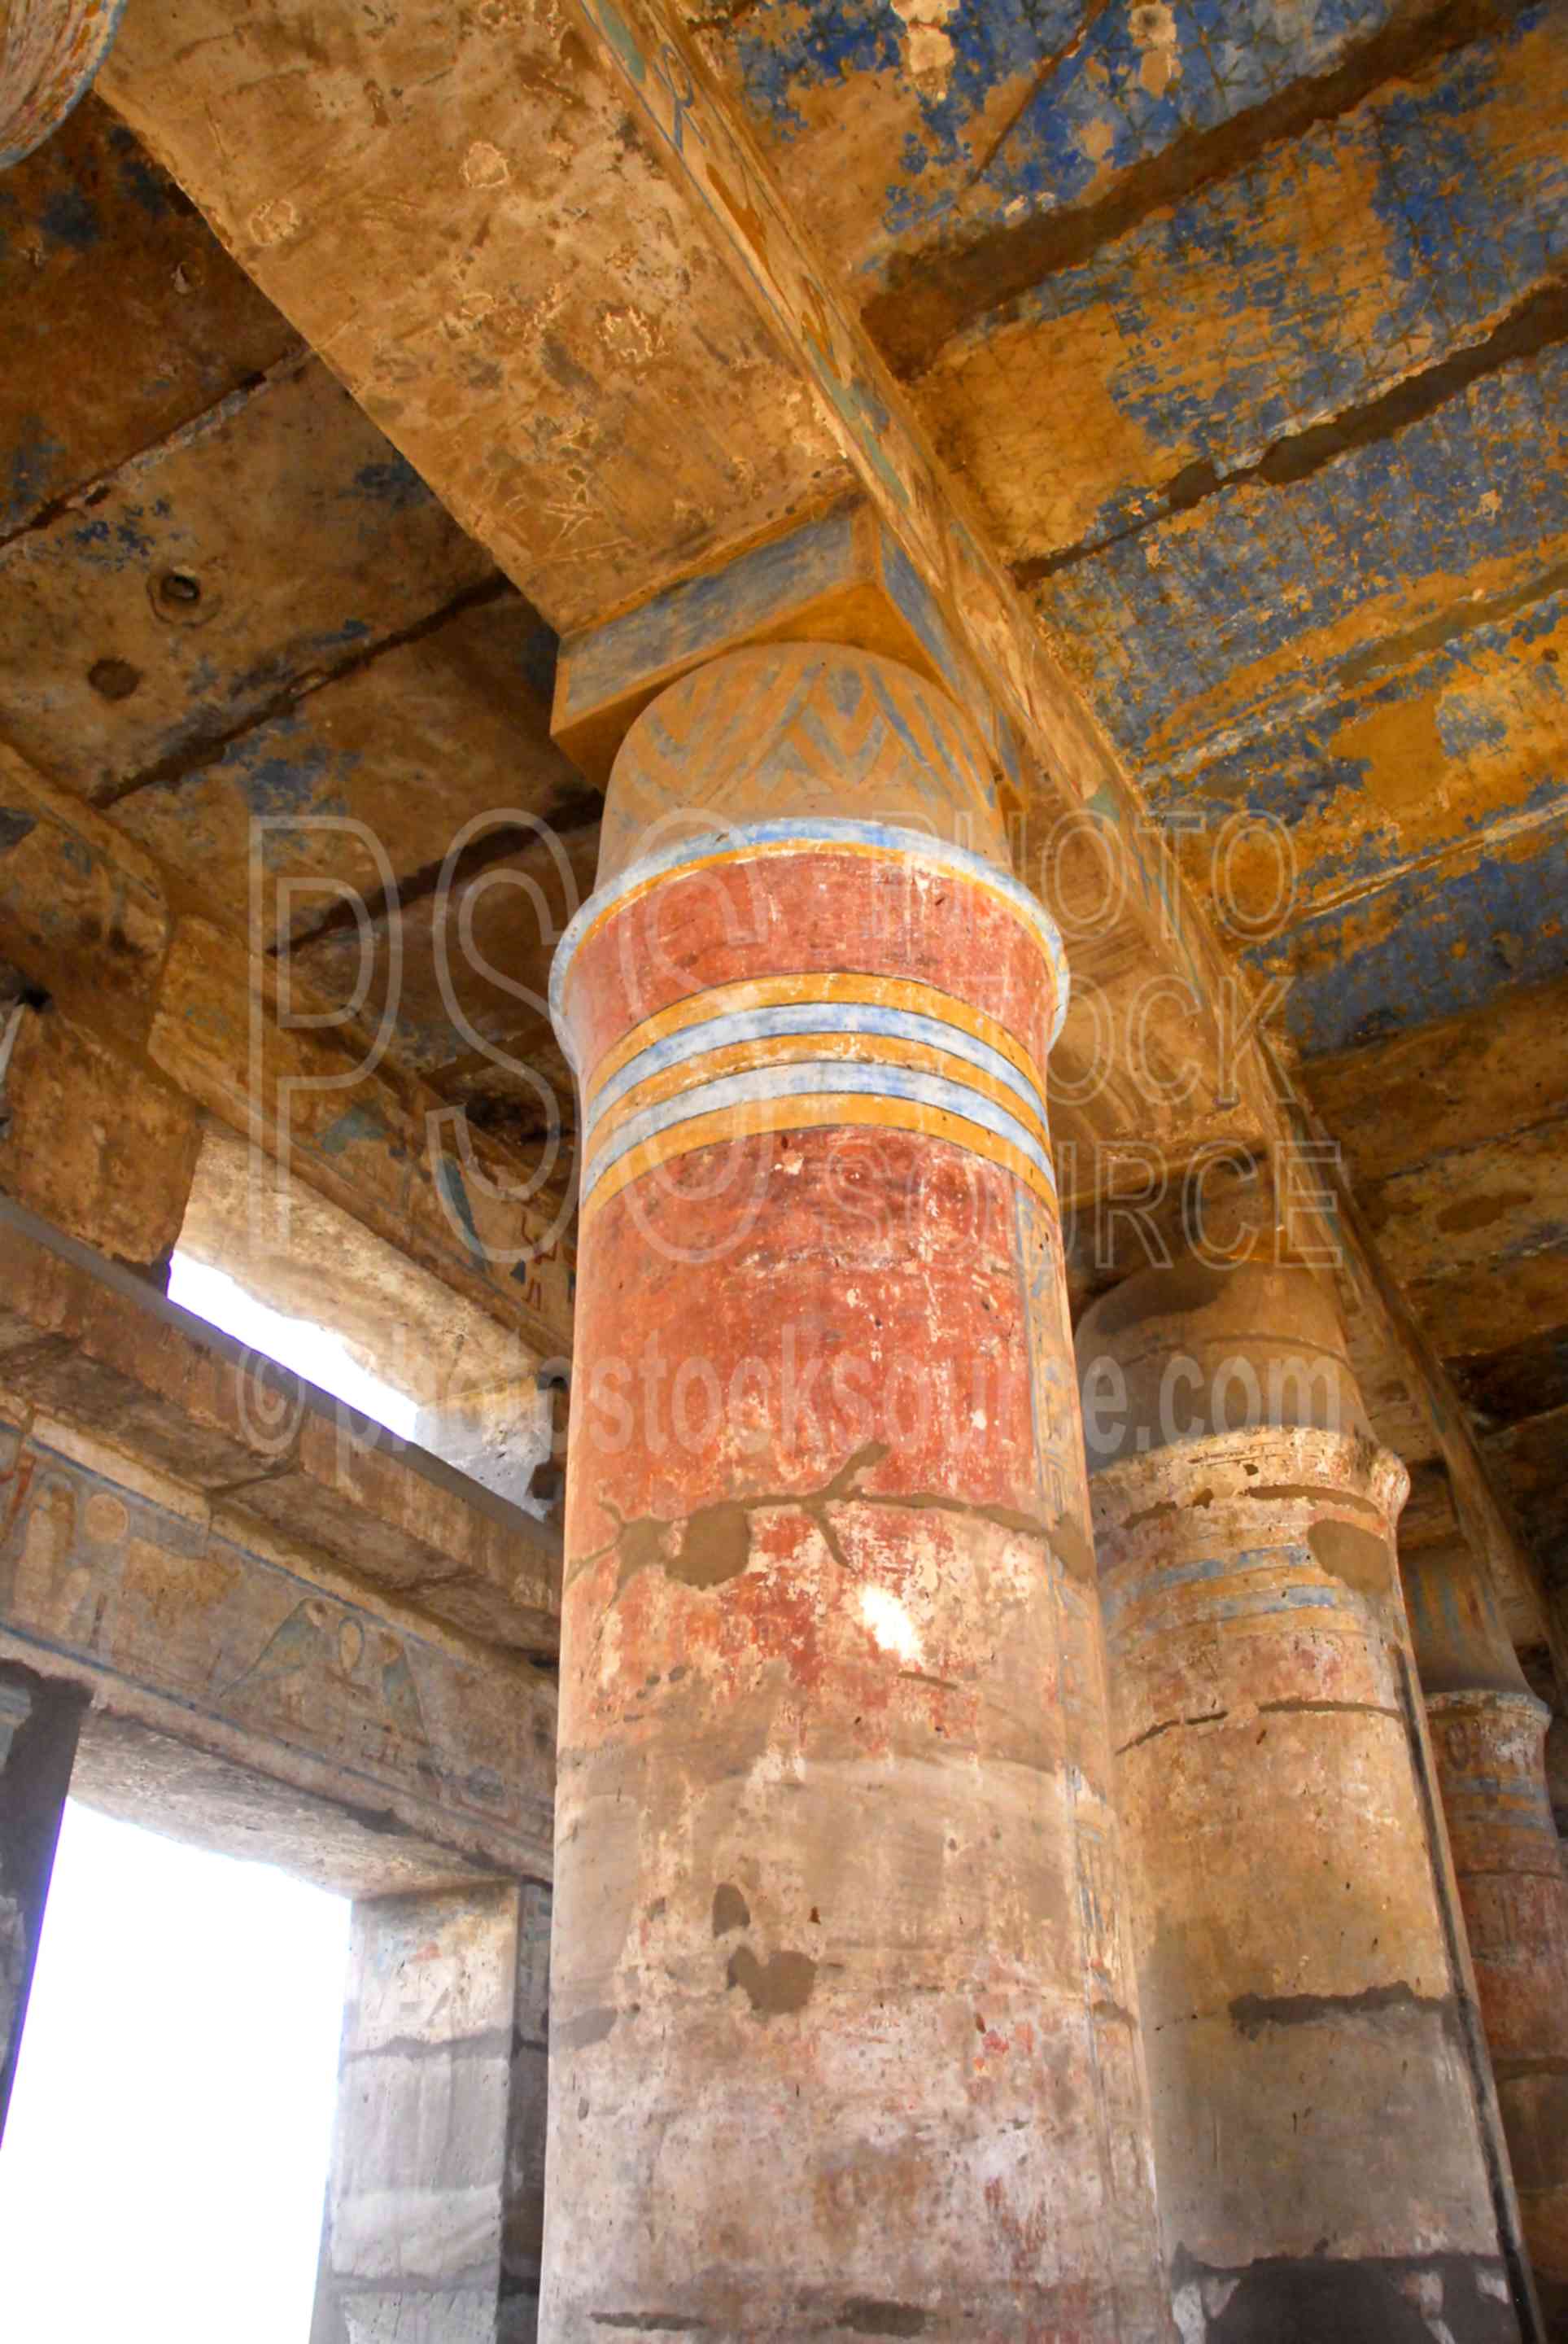 Festival Hall,temple,temple of amun,columns,color,painting,architecture,temples